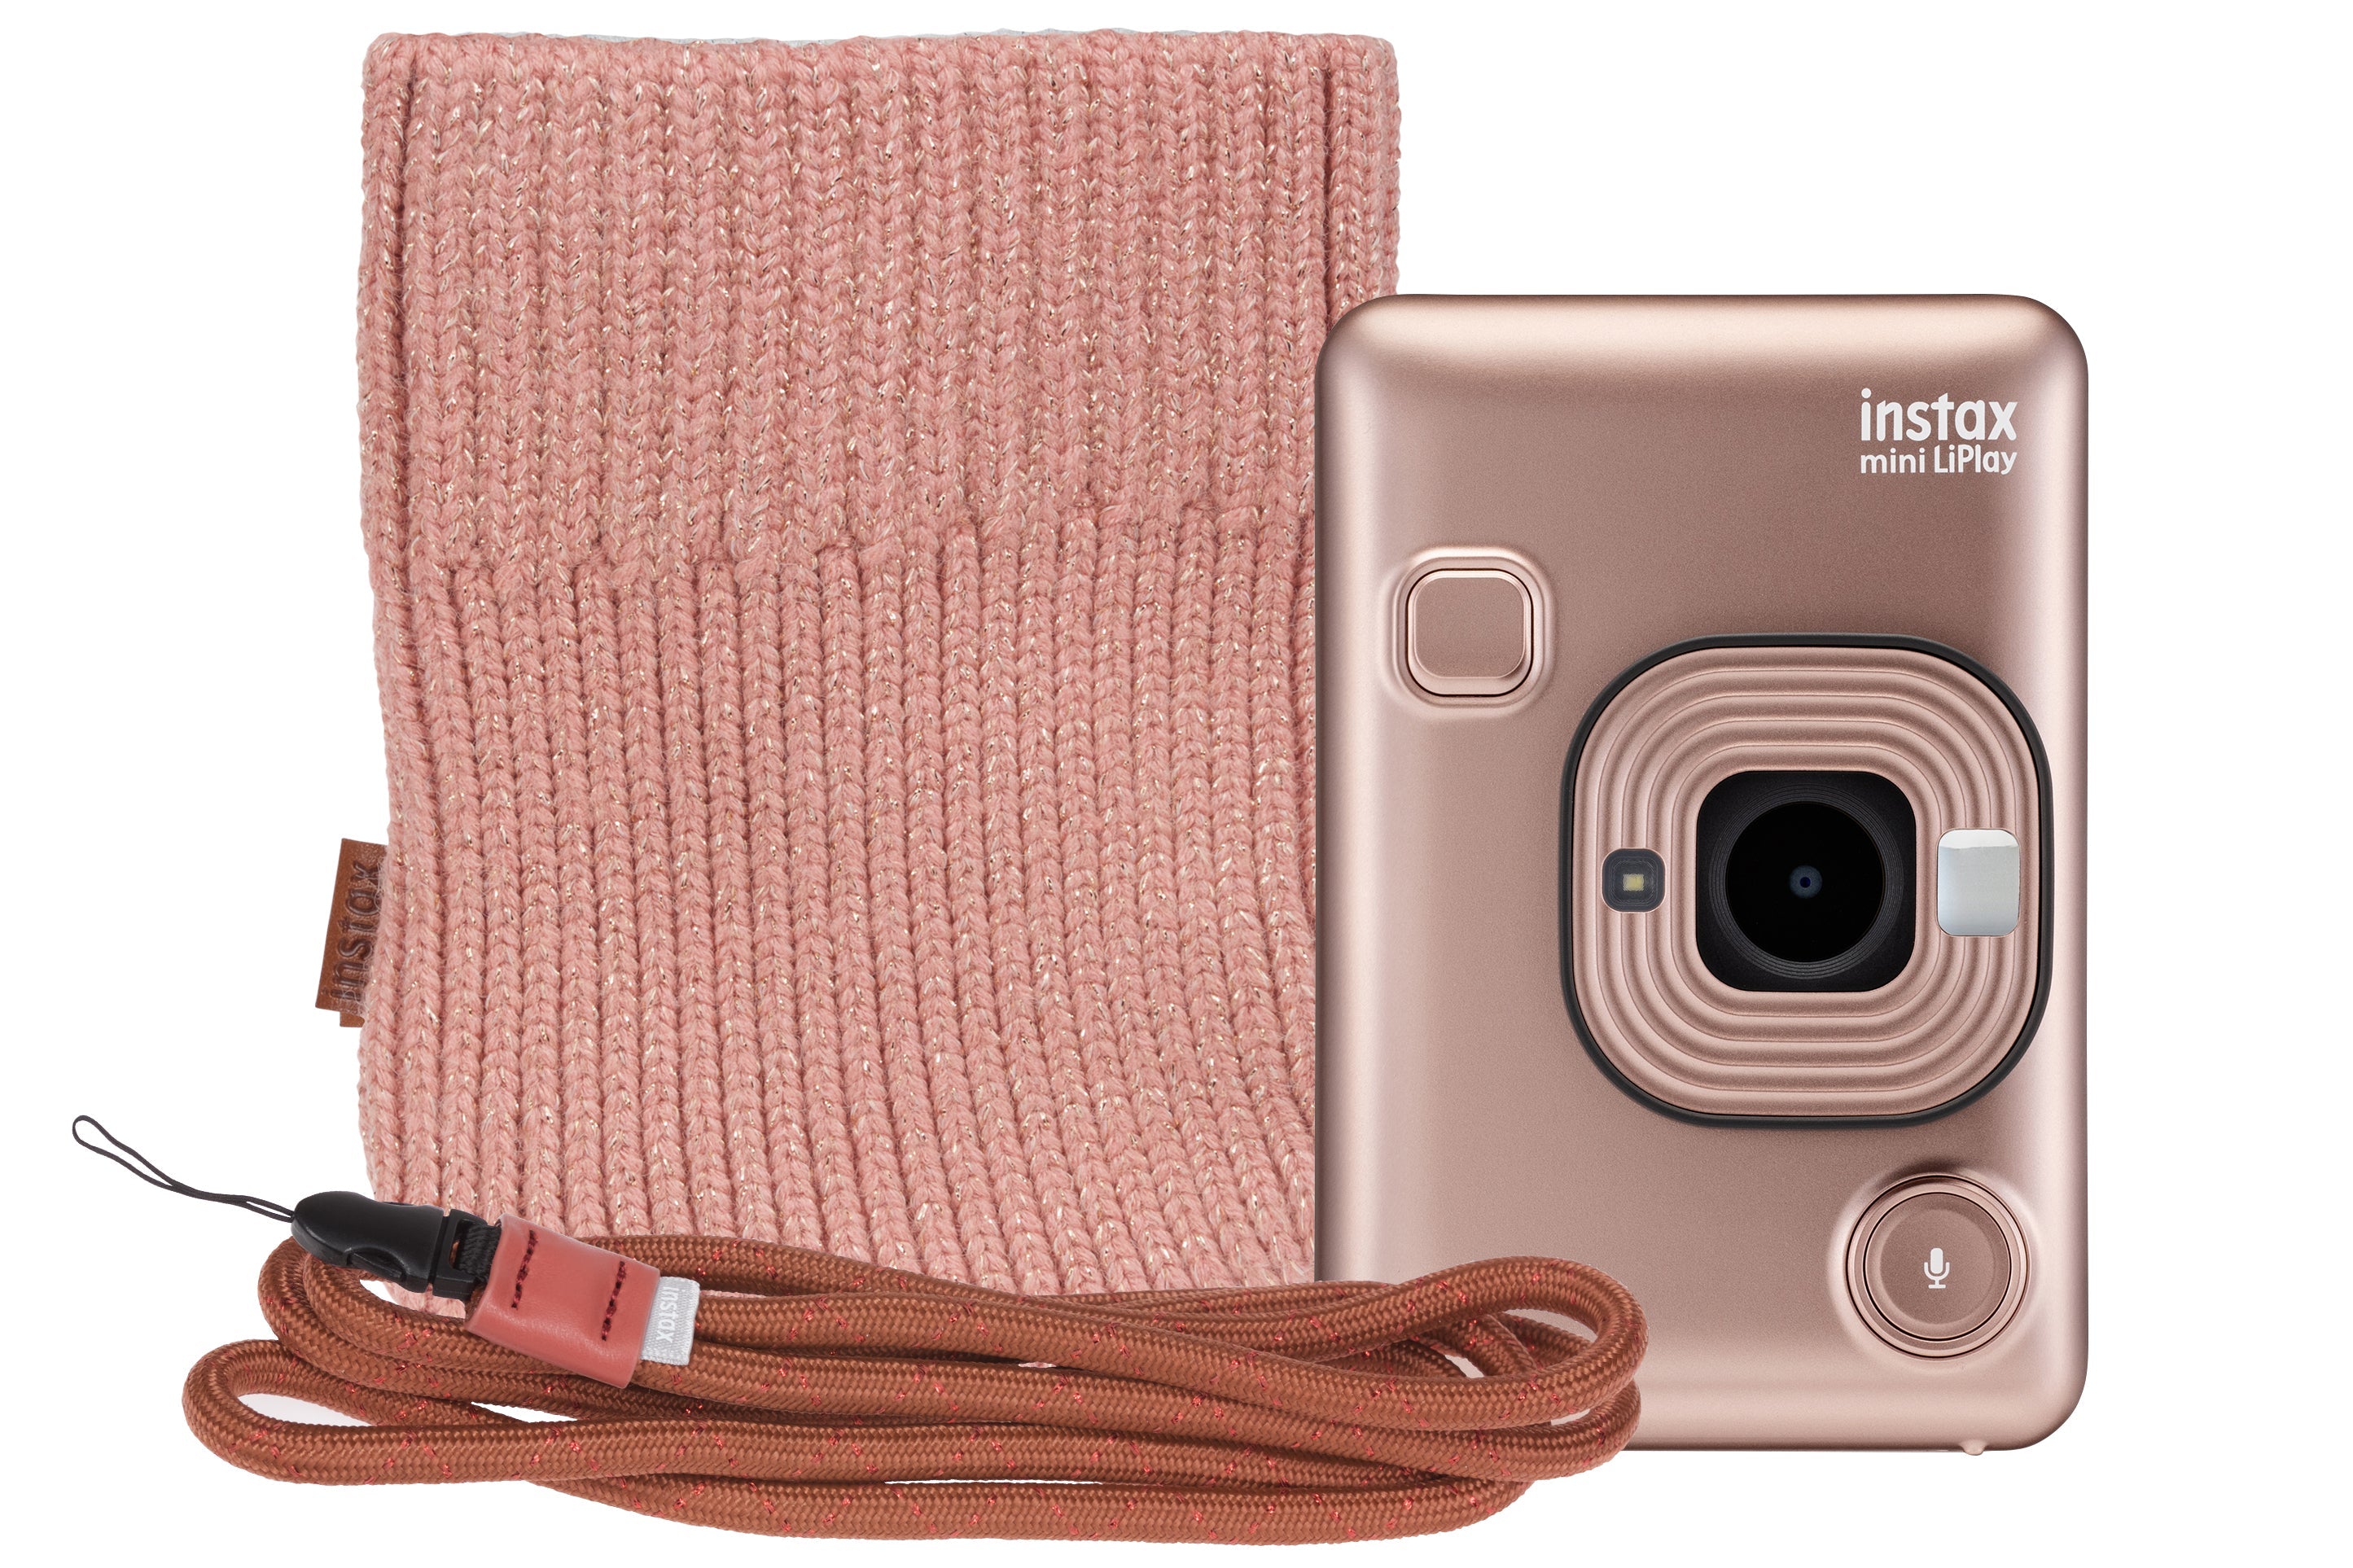 Fujifilm Instax Mini LiPlay Hybrid Instant Camera - Blush Gold (Camera + Pouch + Strap)